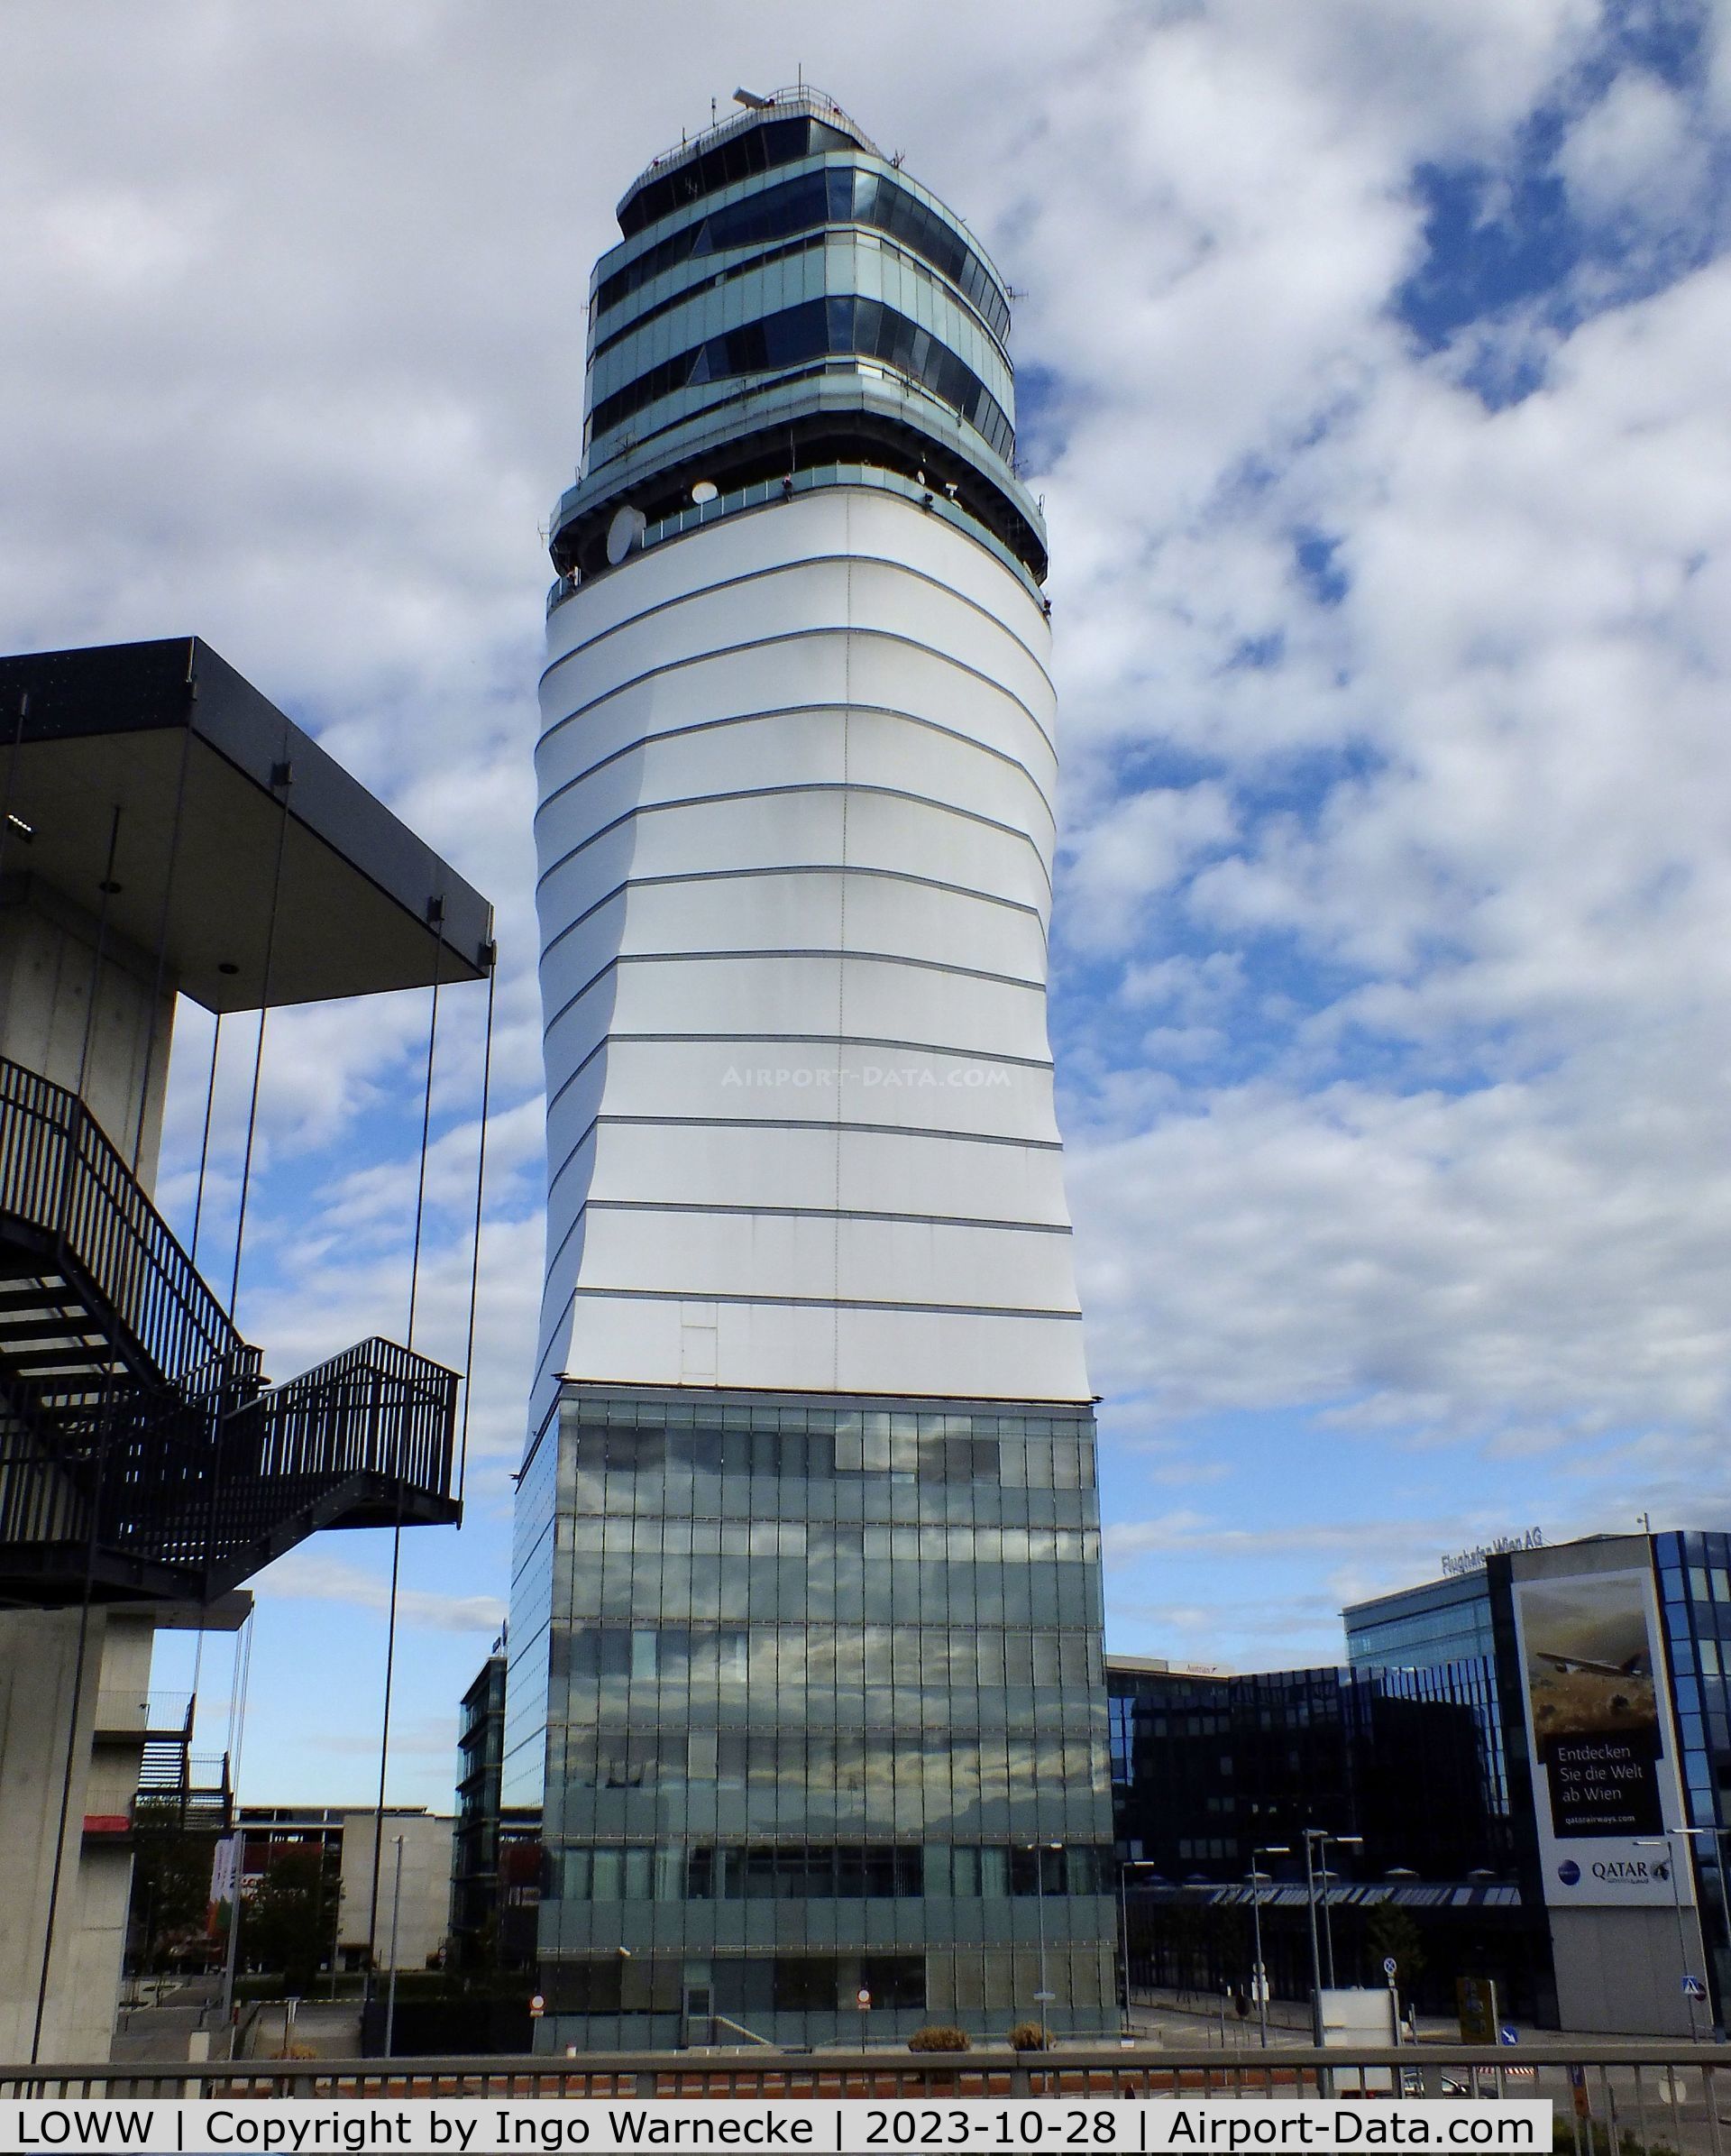 Vienna International Airport, Vienna Austria (LOWW) - looking up at the tower at Wien airport